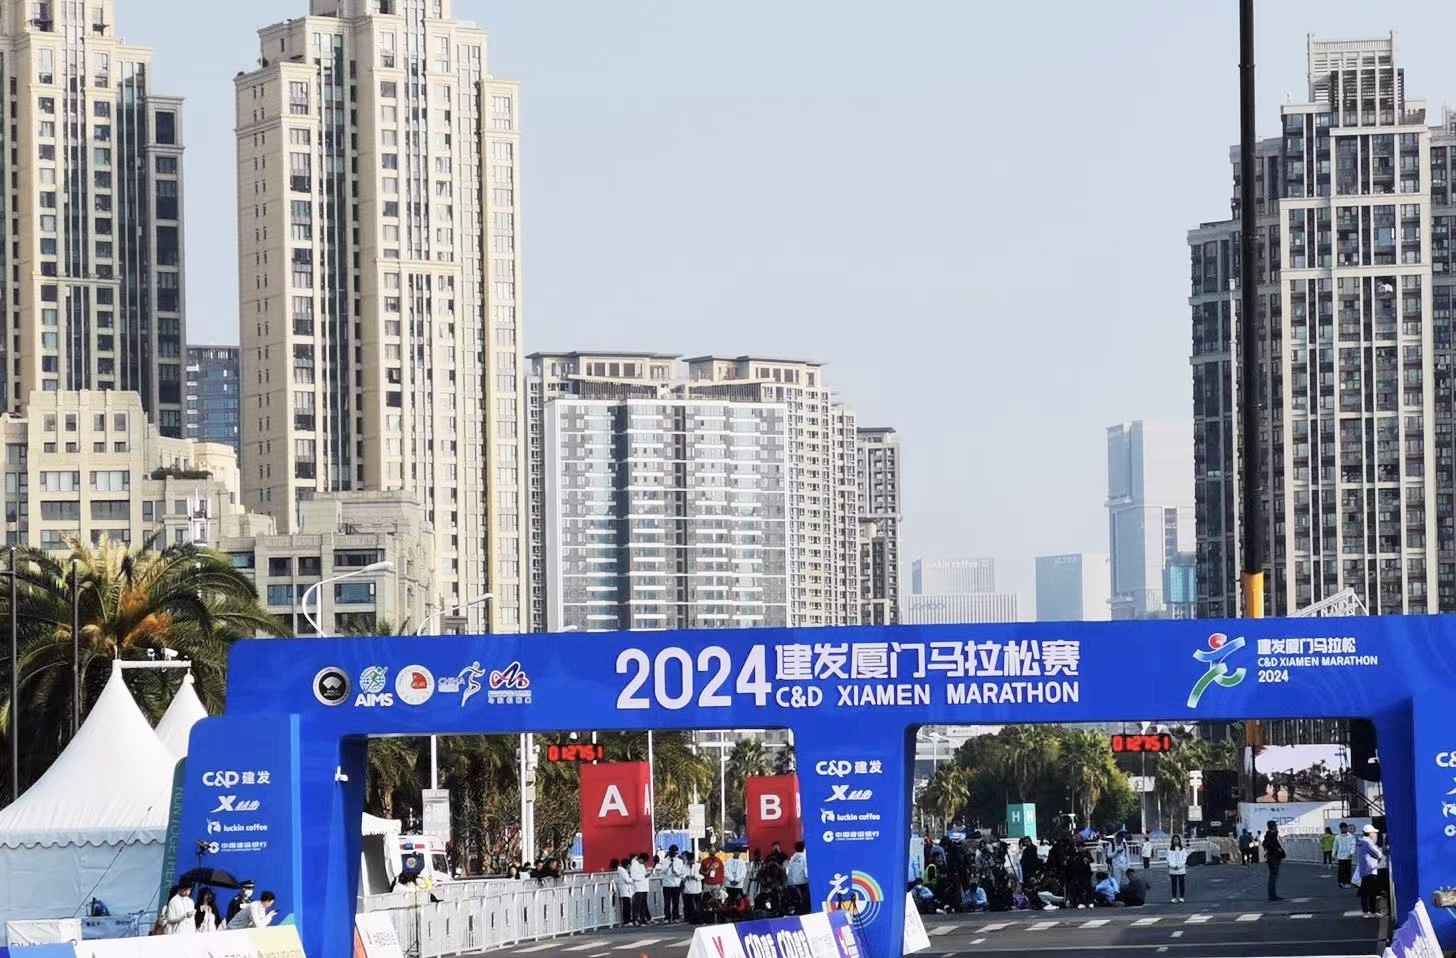 2024 Xiamen Marathon: Beoka uses professional rehabilitation equipment to assist athletes in post race recovery